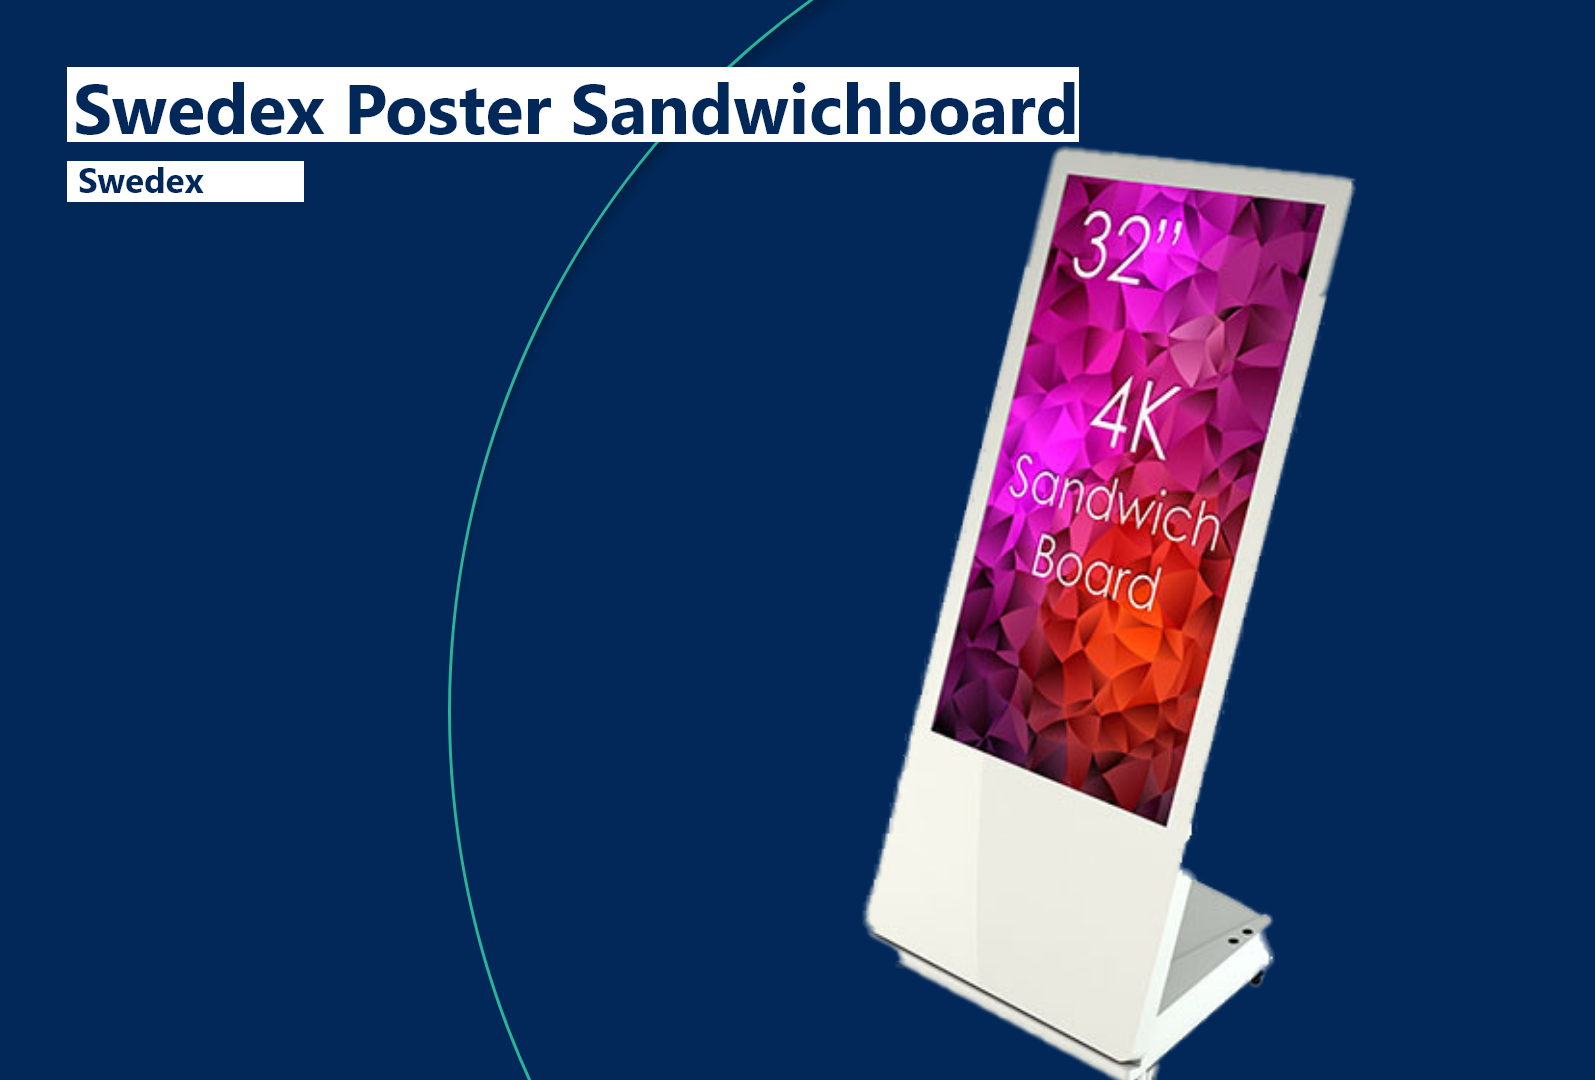 Swedex Poster Sandwichboard